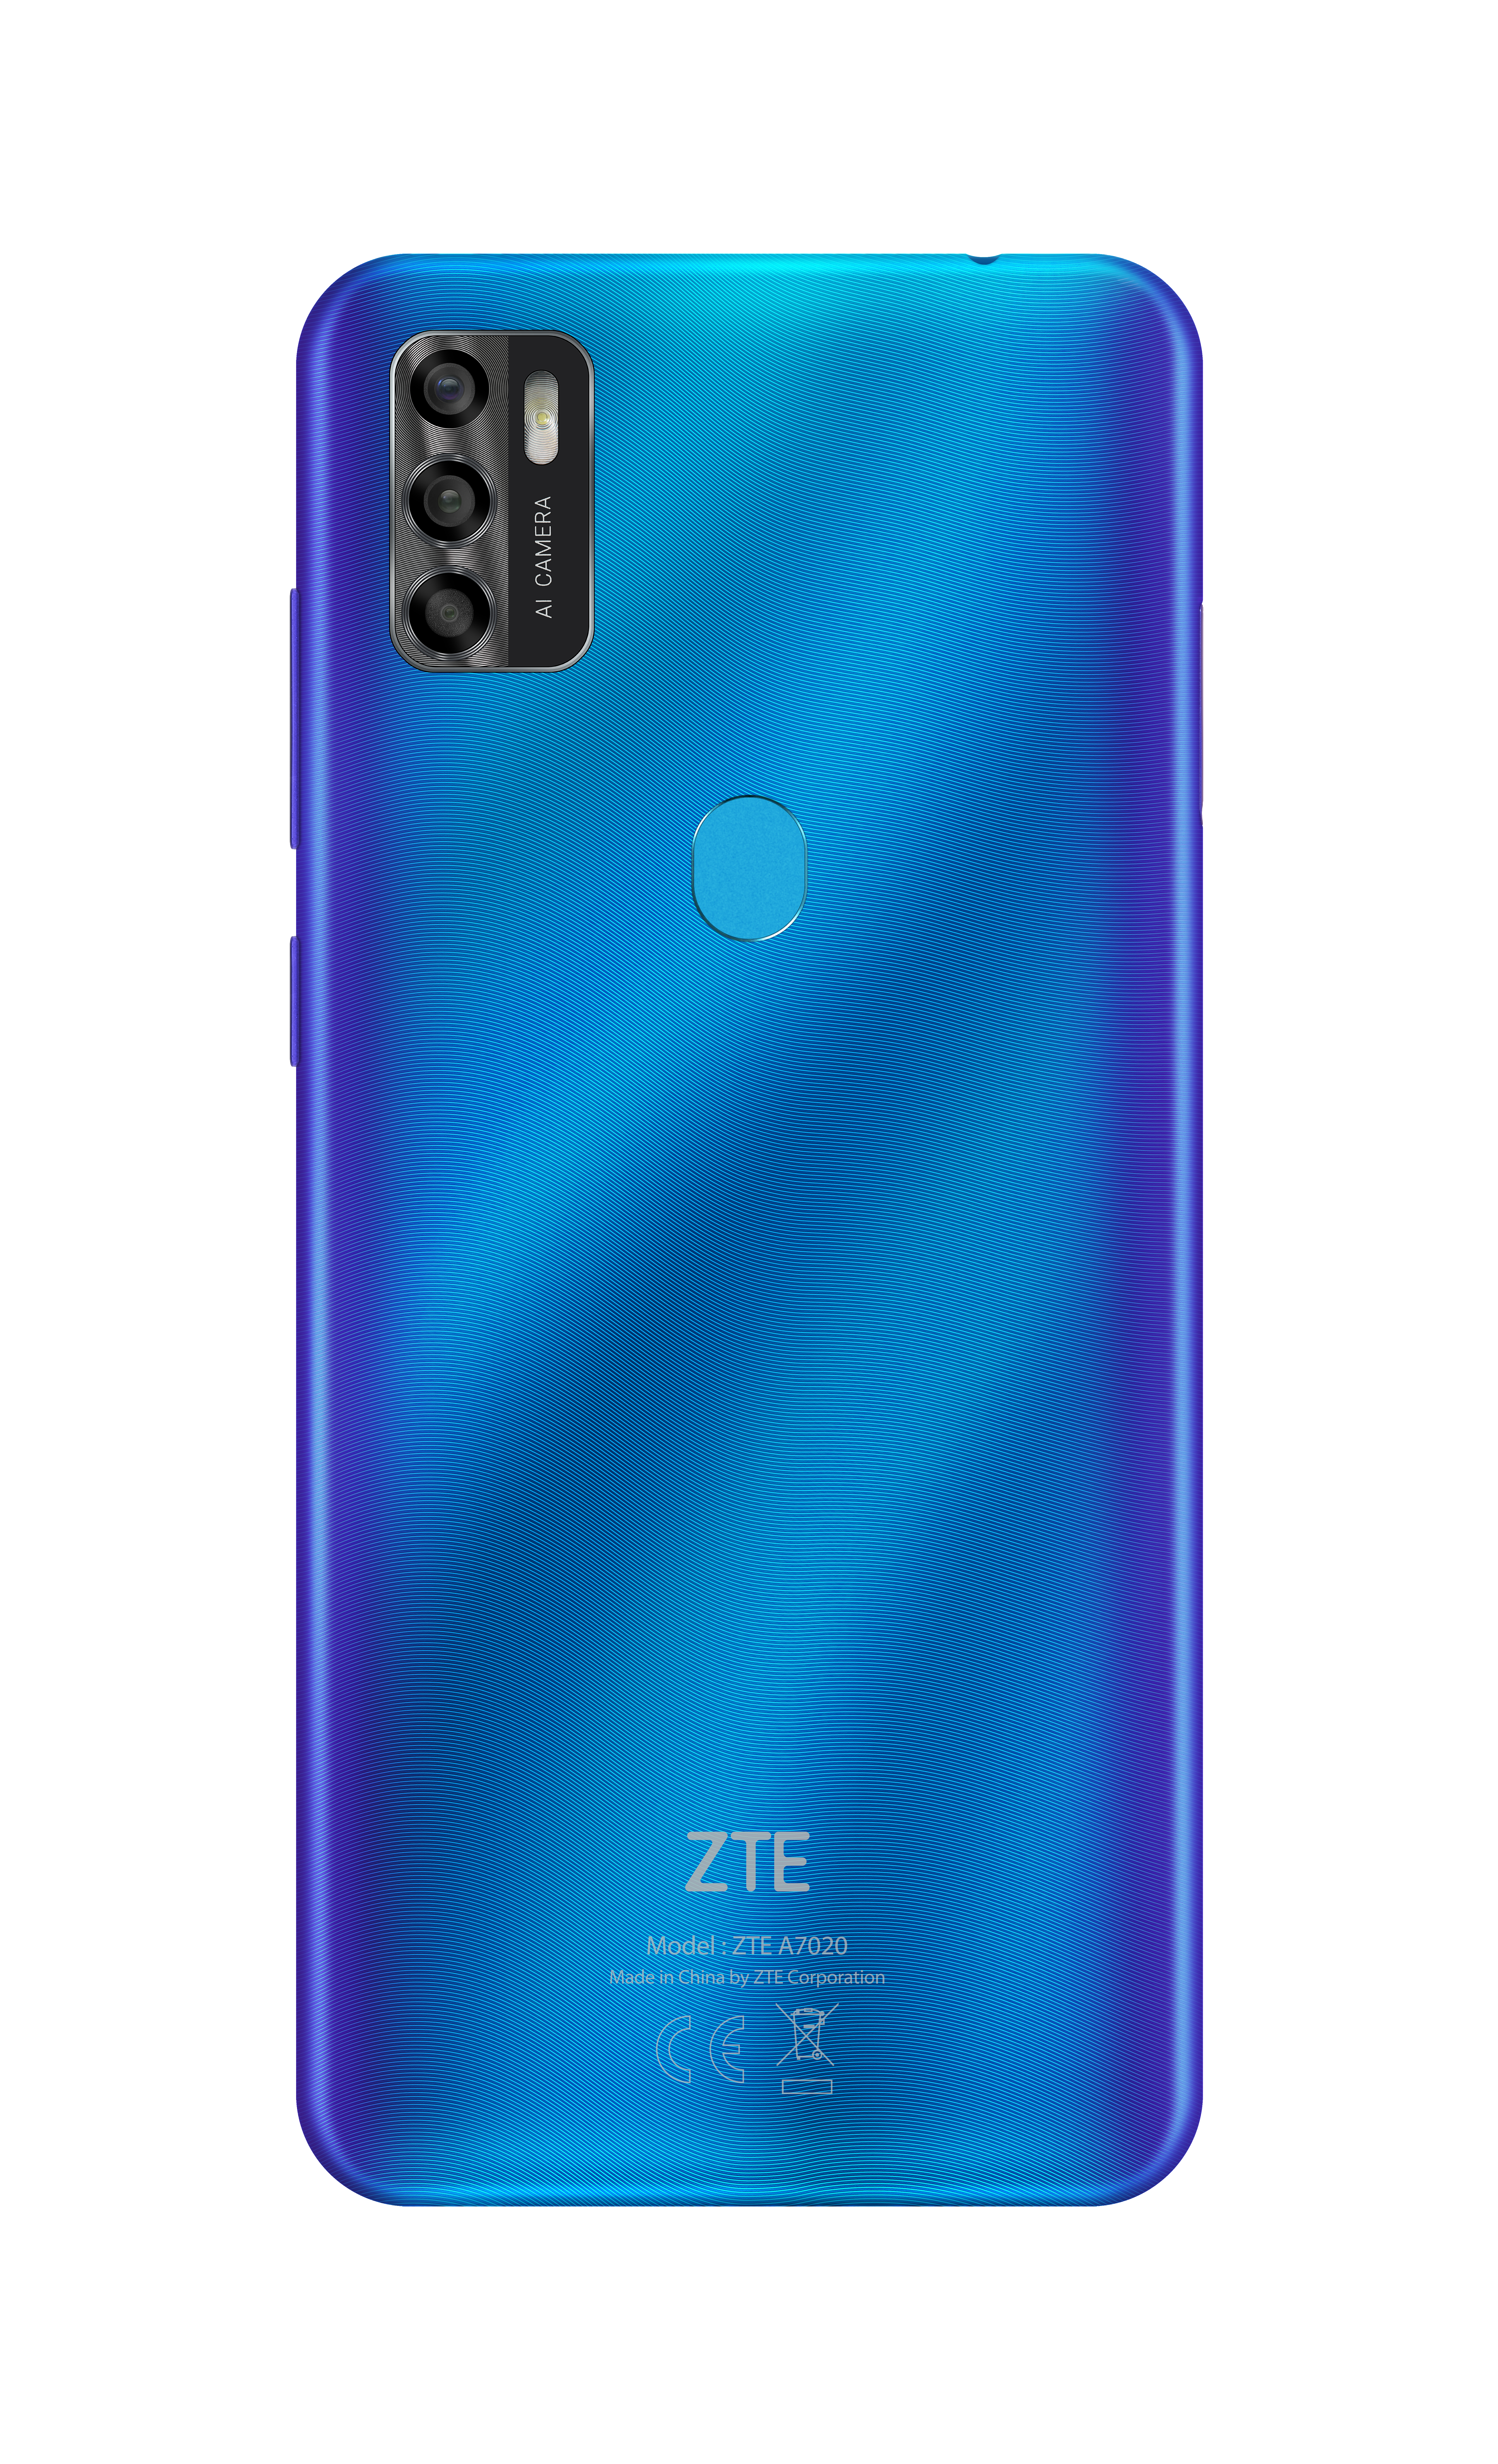 GB 2020 Dual SIM A7s ZTE 64 Blau